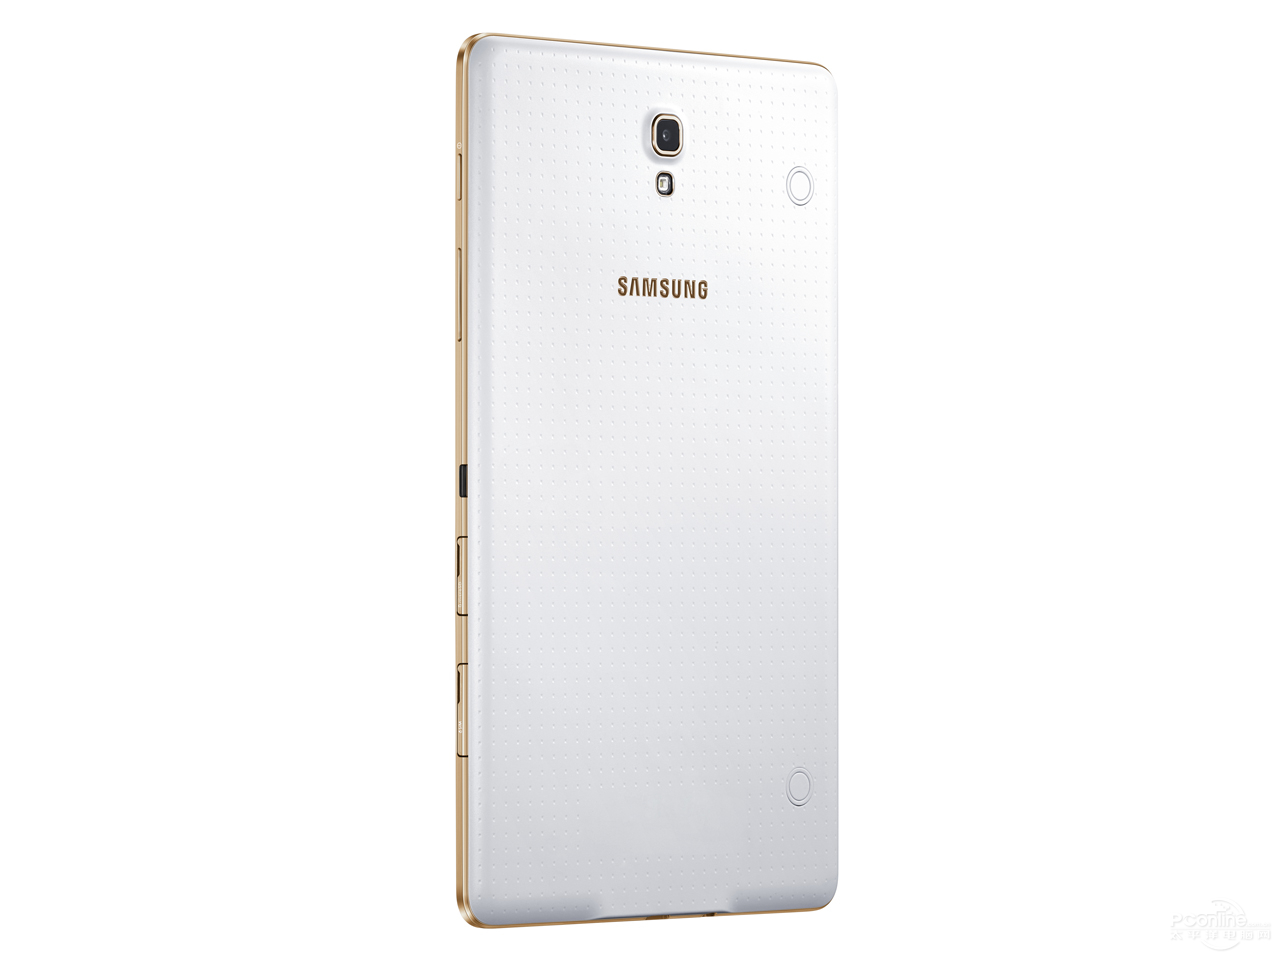  Galaxy Tab S T705C(4G)